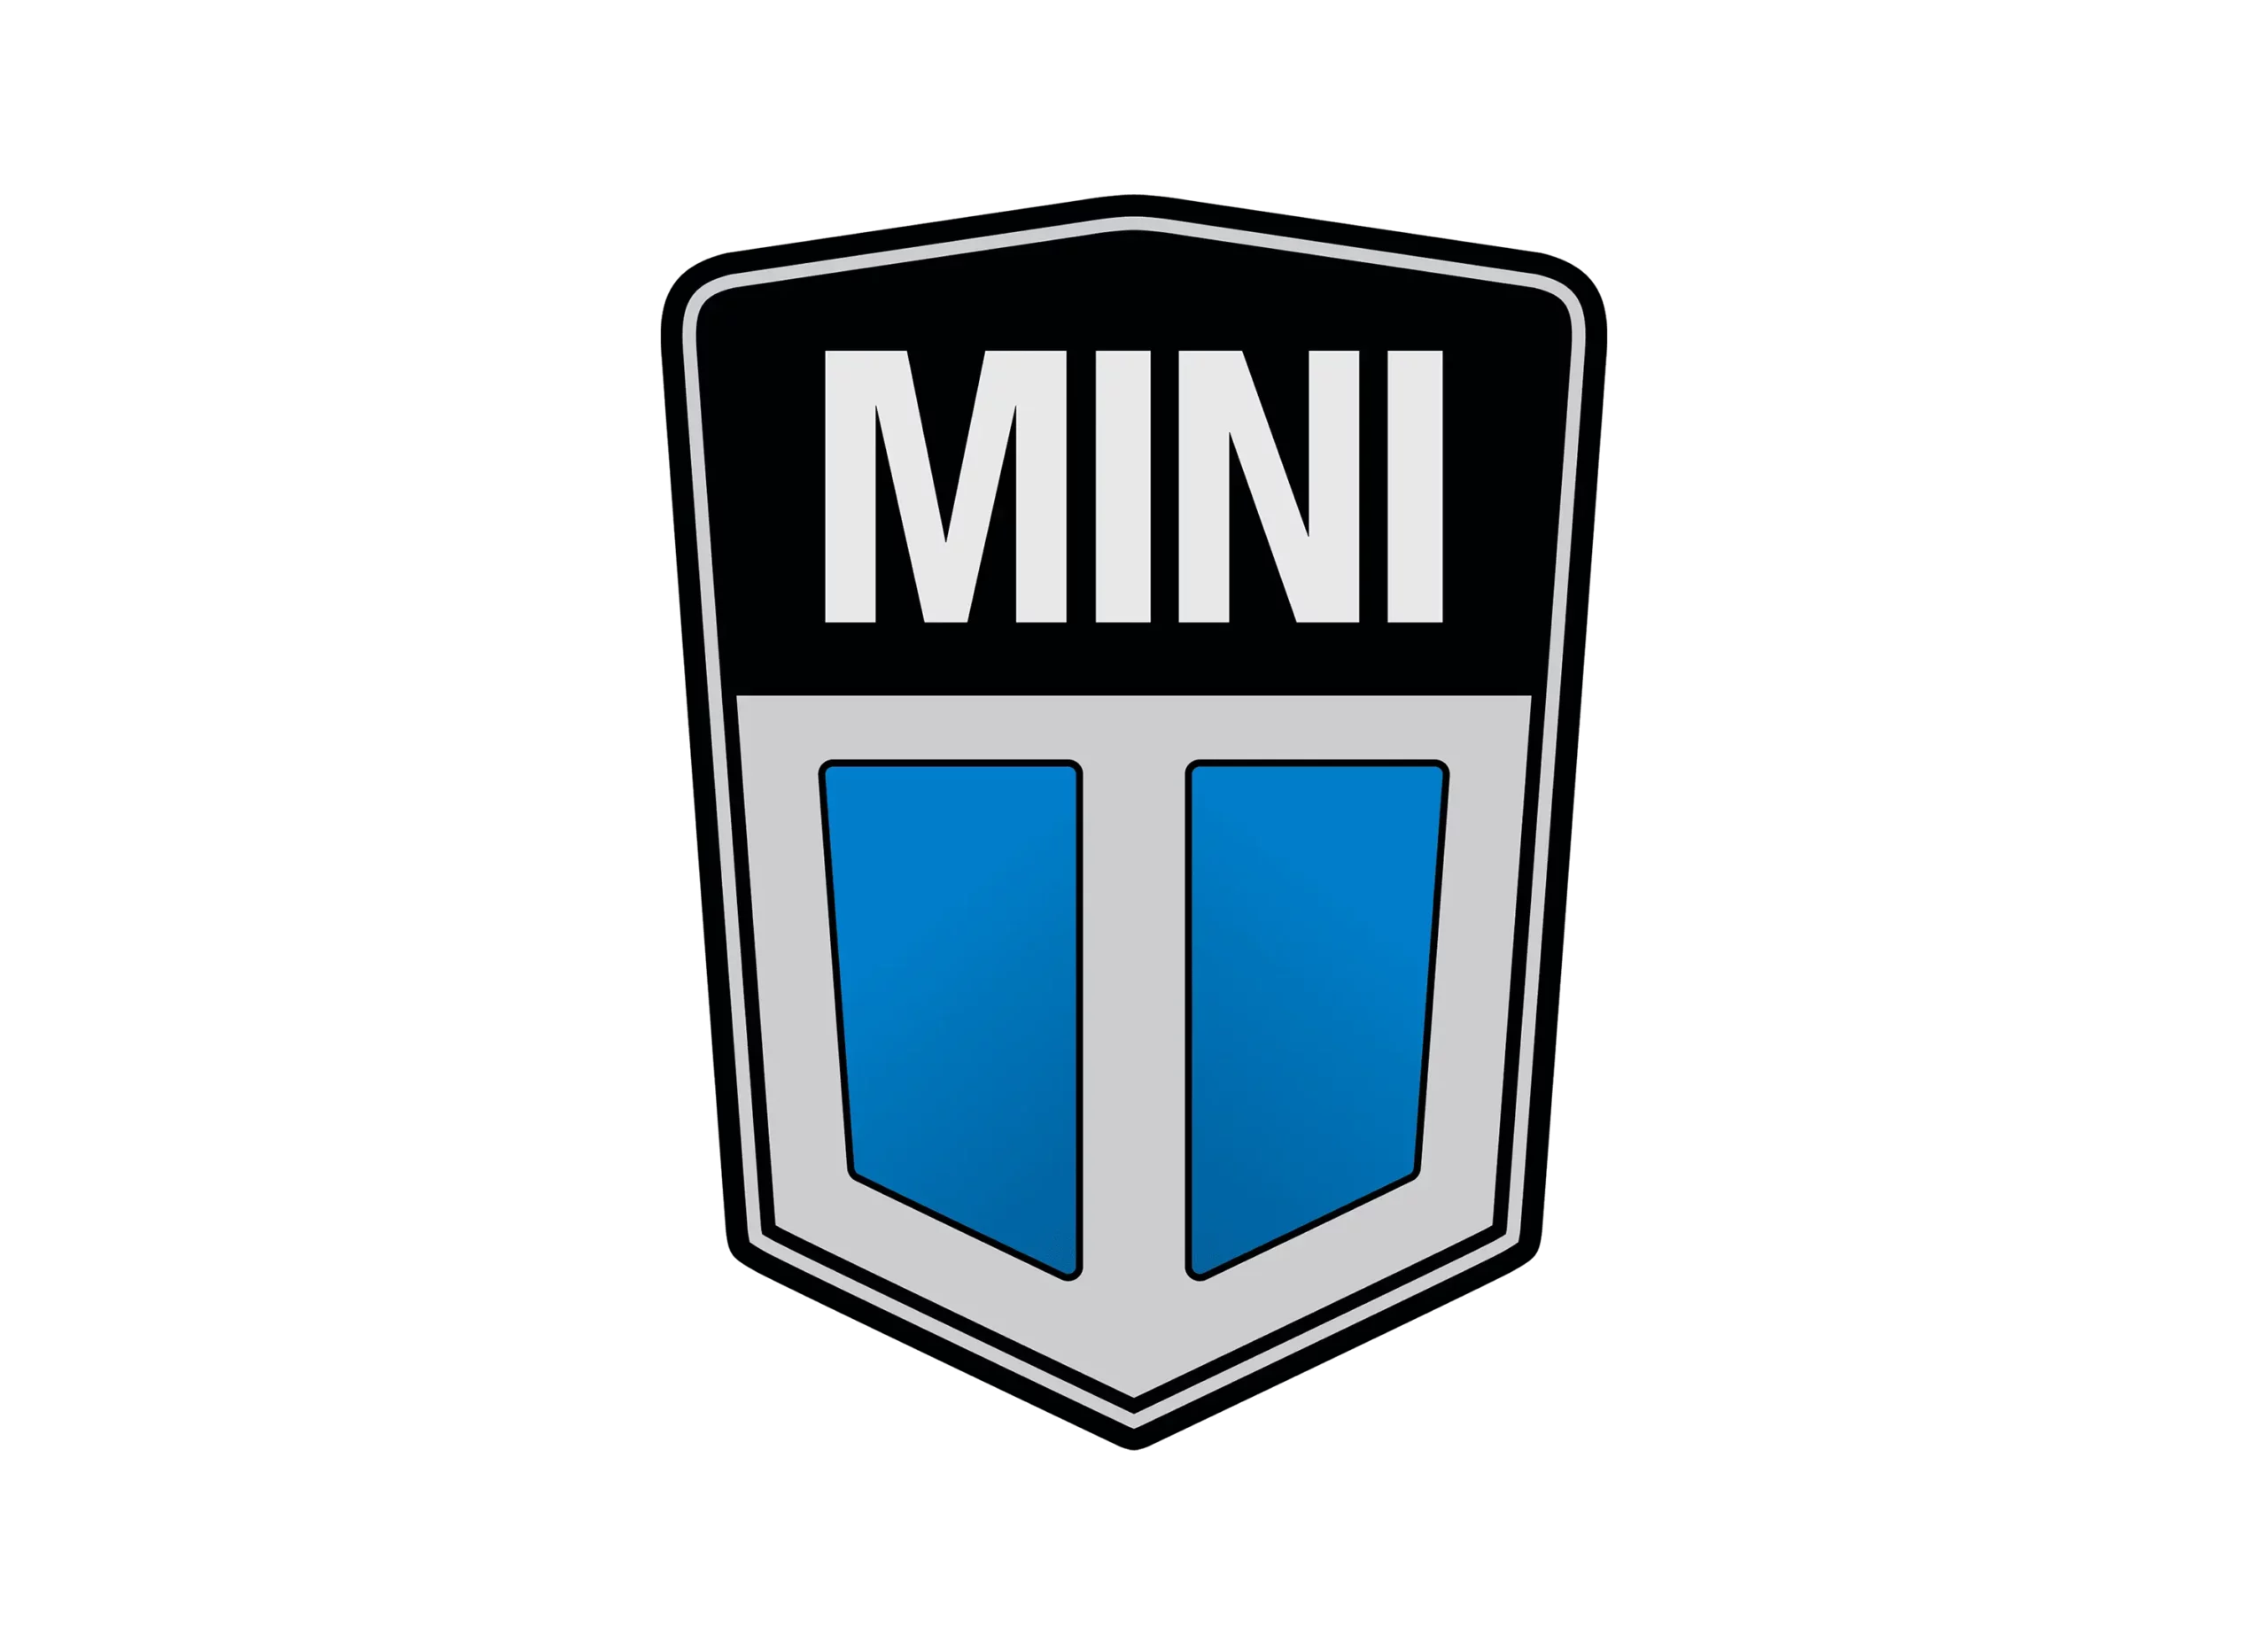 Mini cooper s Logos